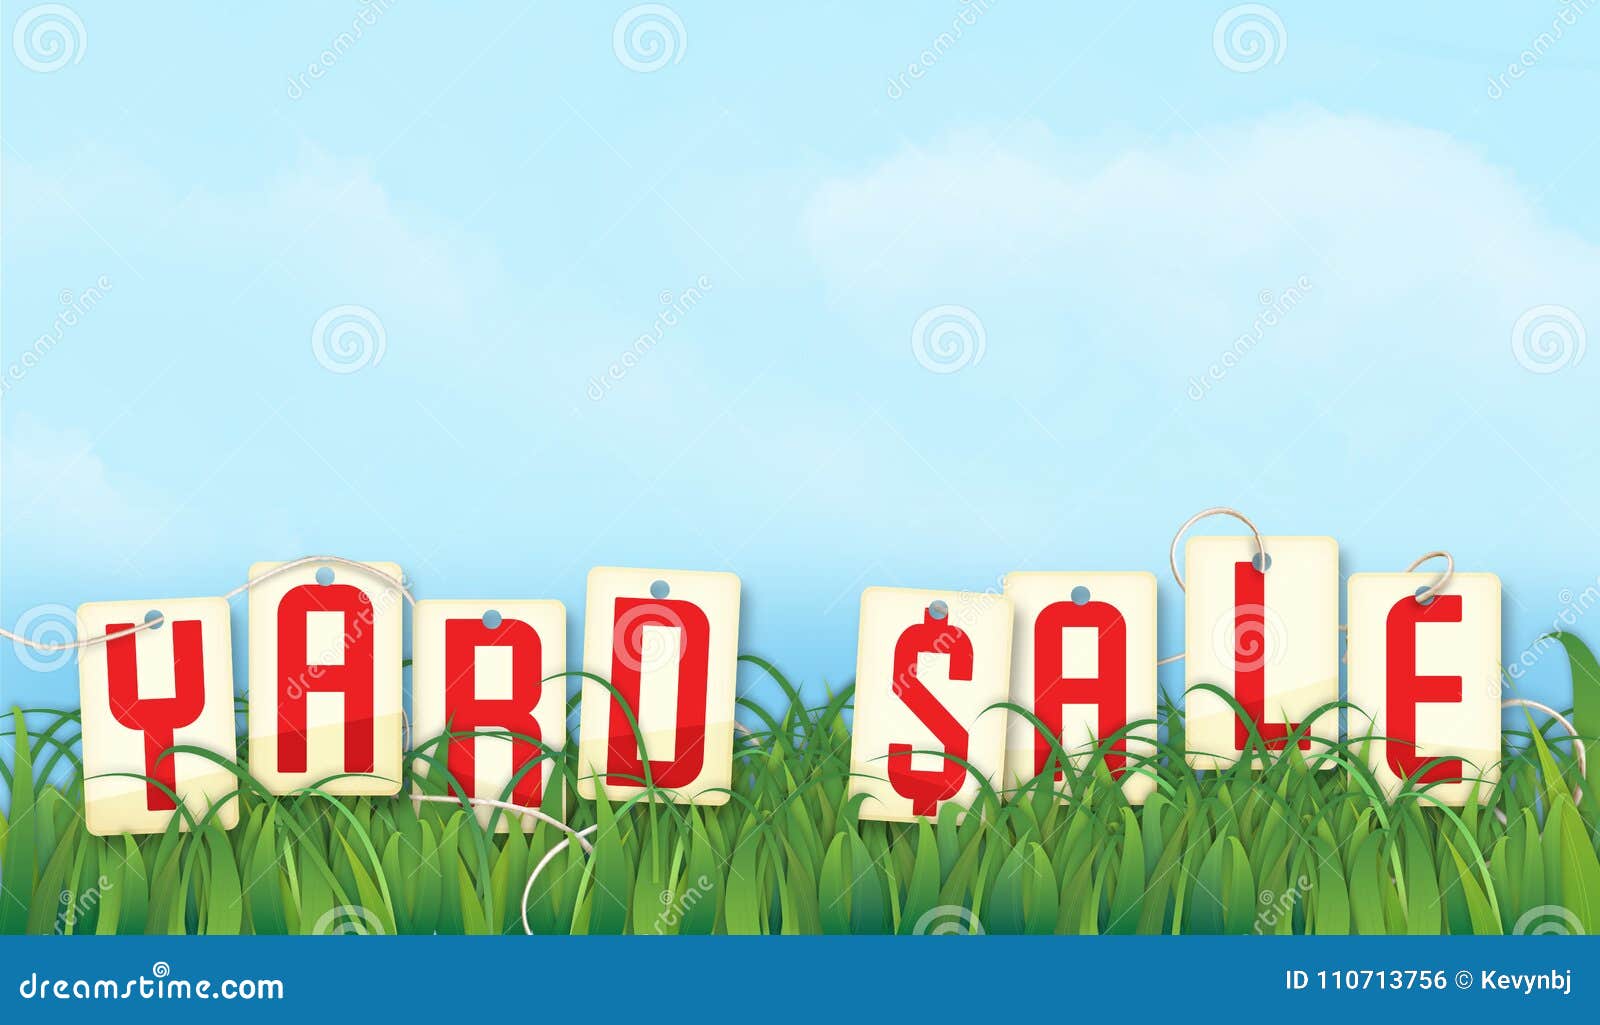 yard sale sign graphic